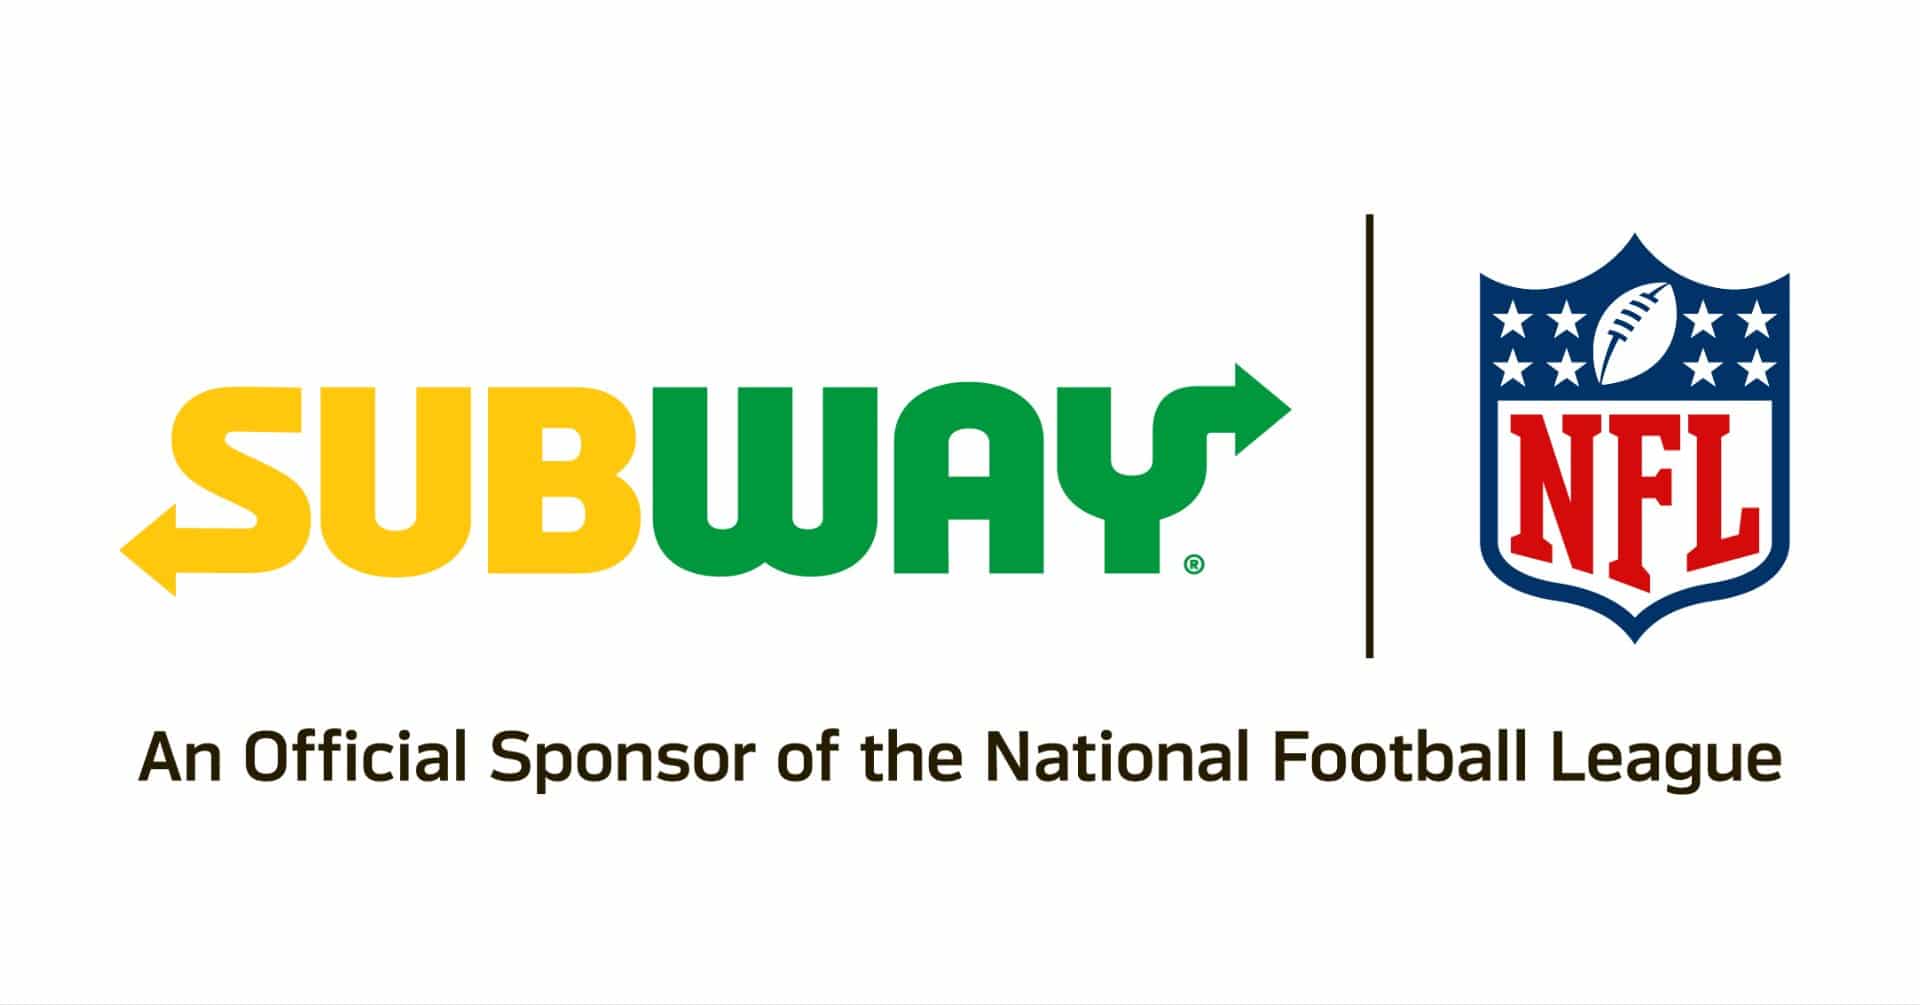 Subway sponsors of NFL